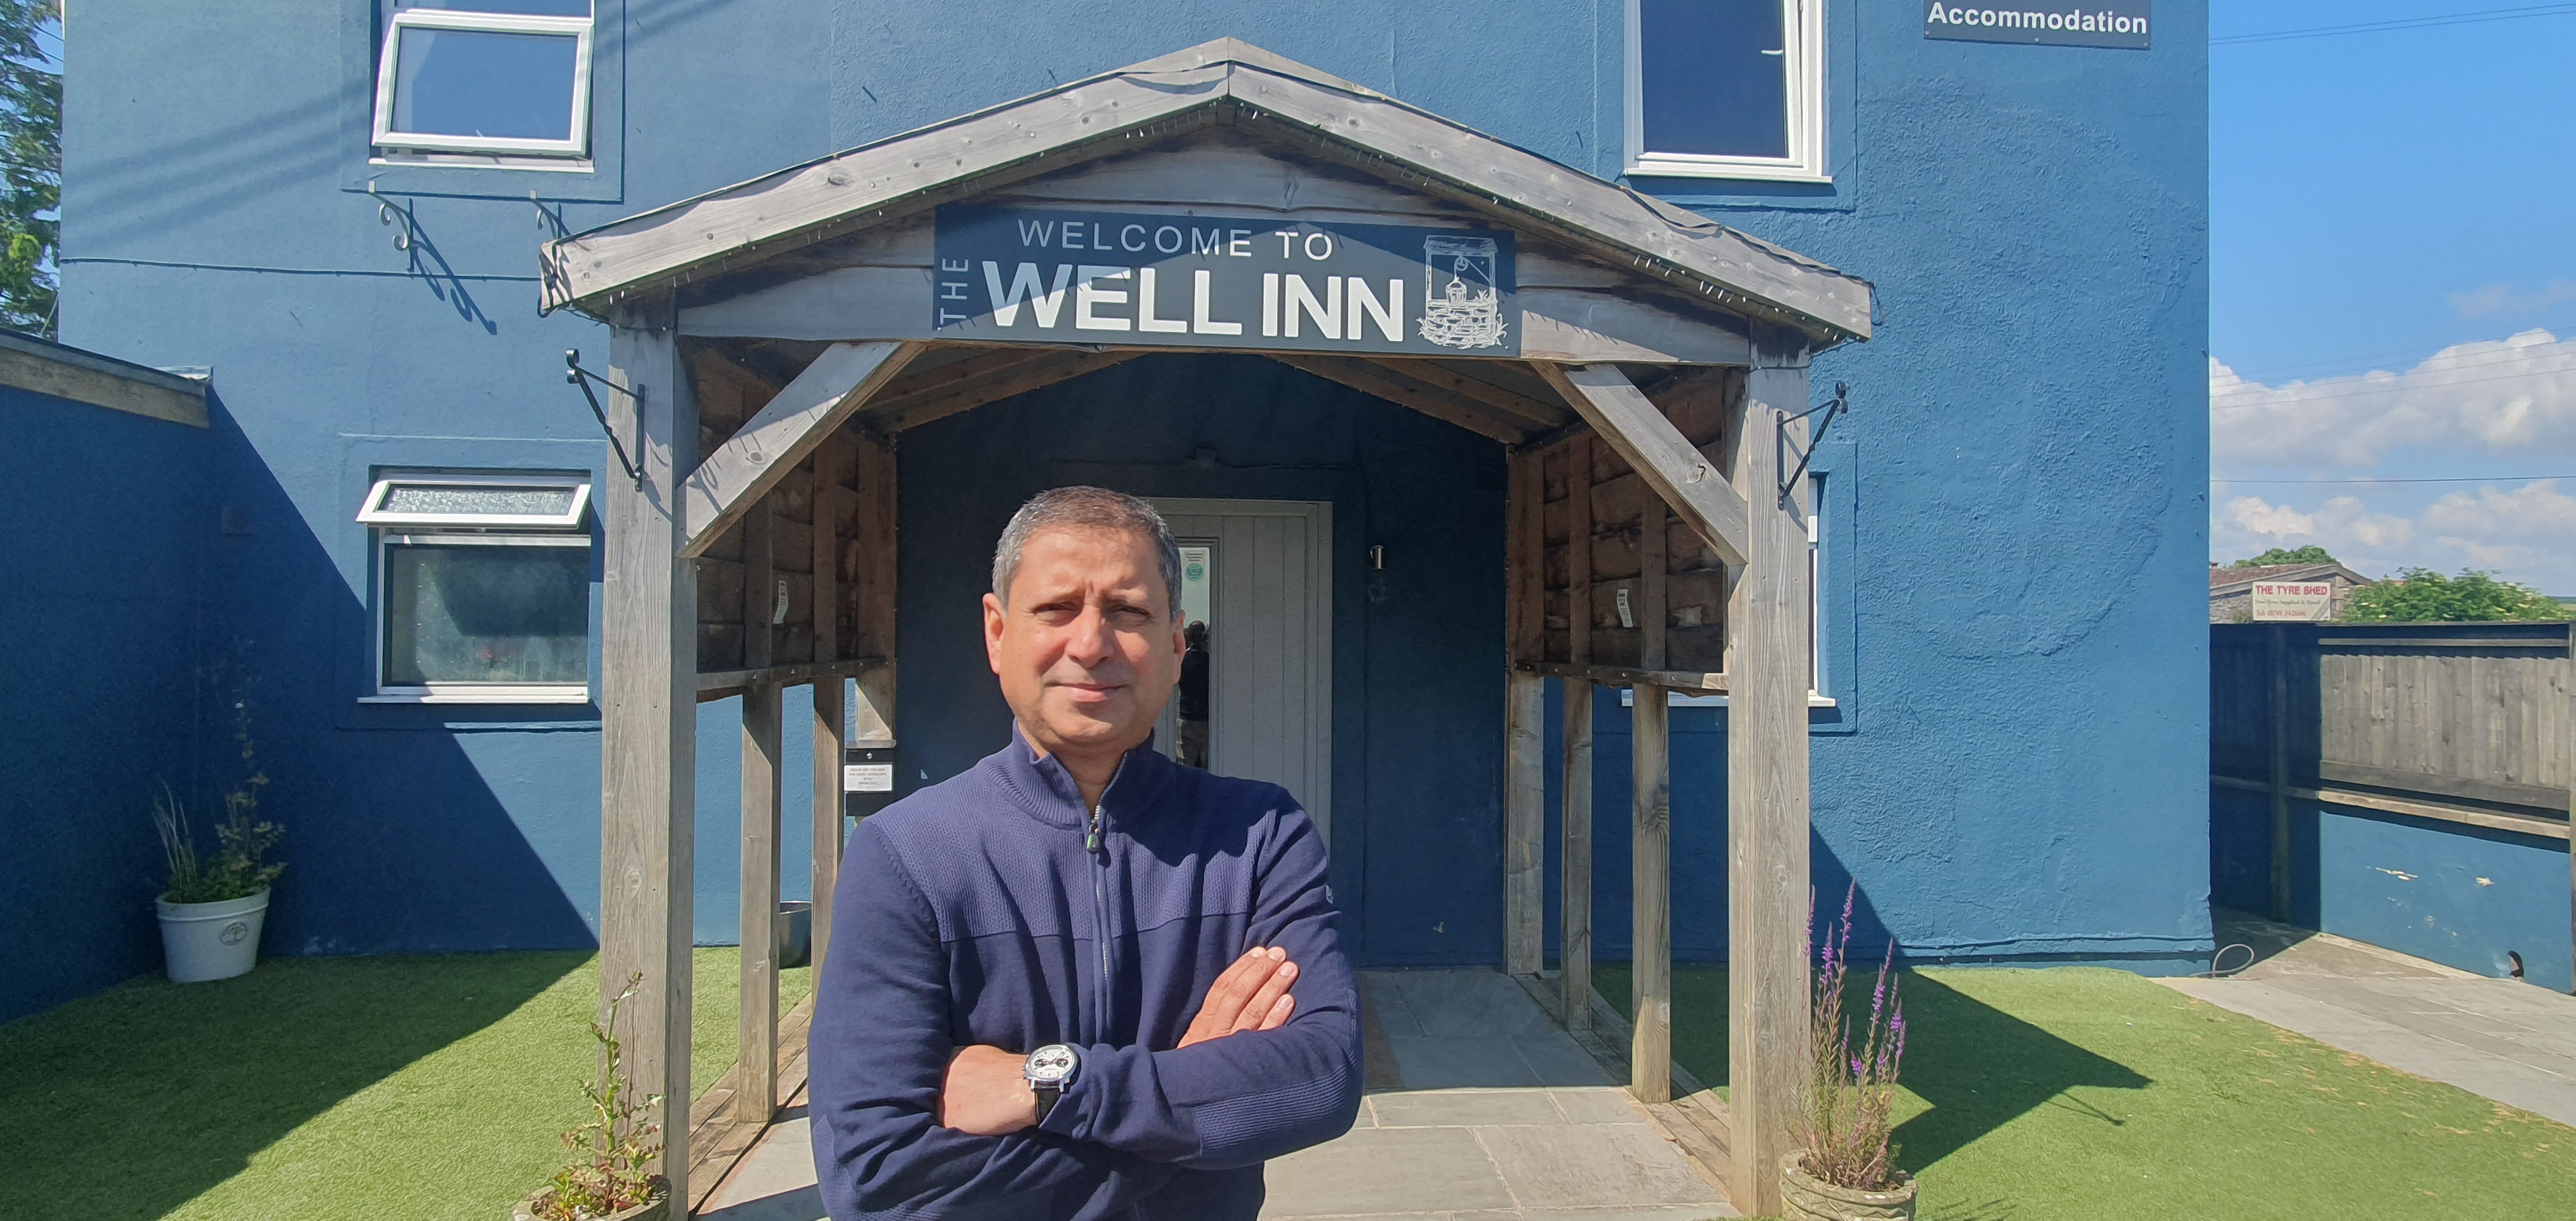 Imran Ali, new owner at The Well Inn, Shepton Mallet